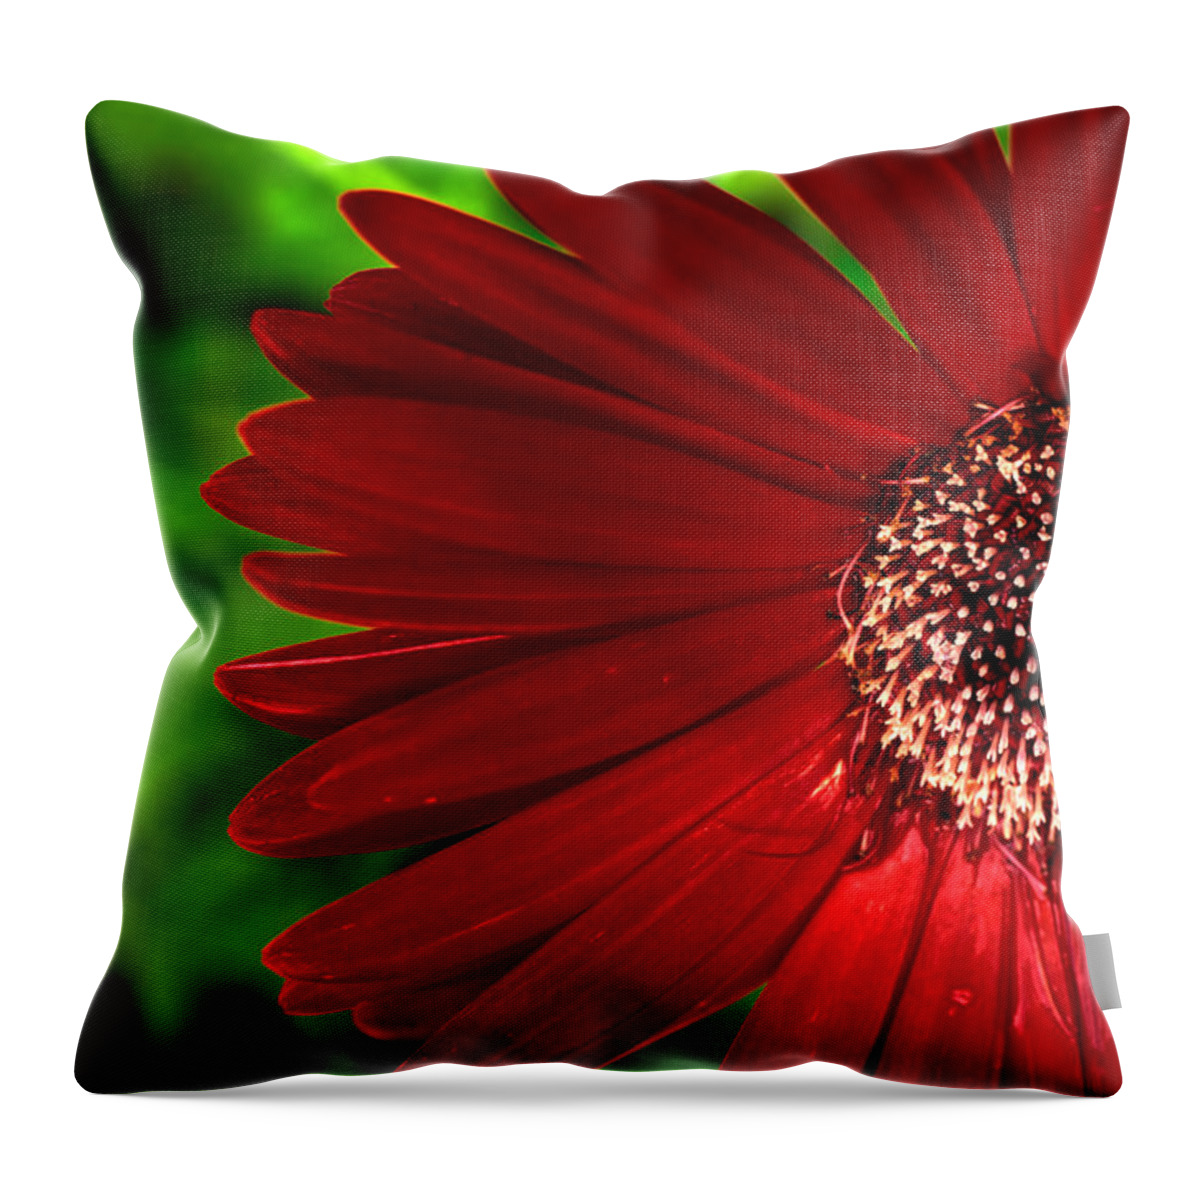 Gerber Daisy Throw Pillow featuring the photograph Red Gerber Daisy by John Magyar Photography